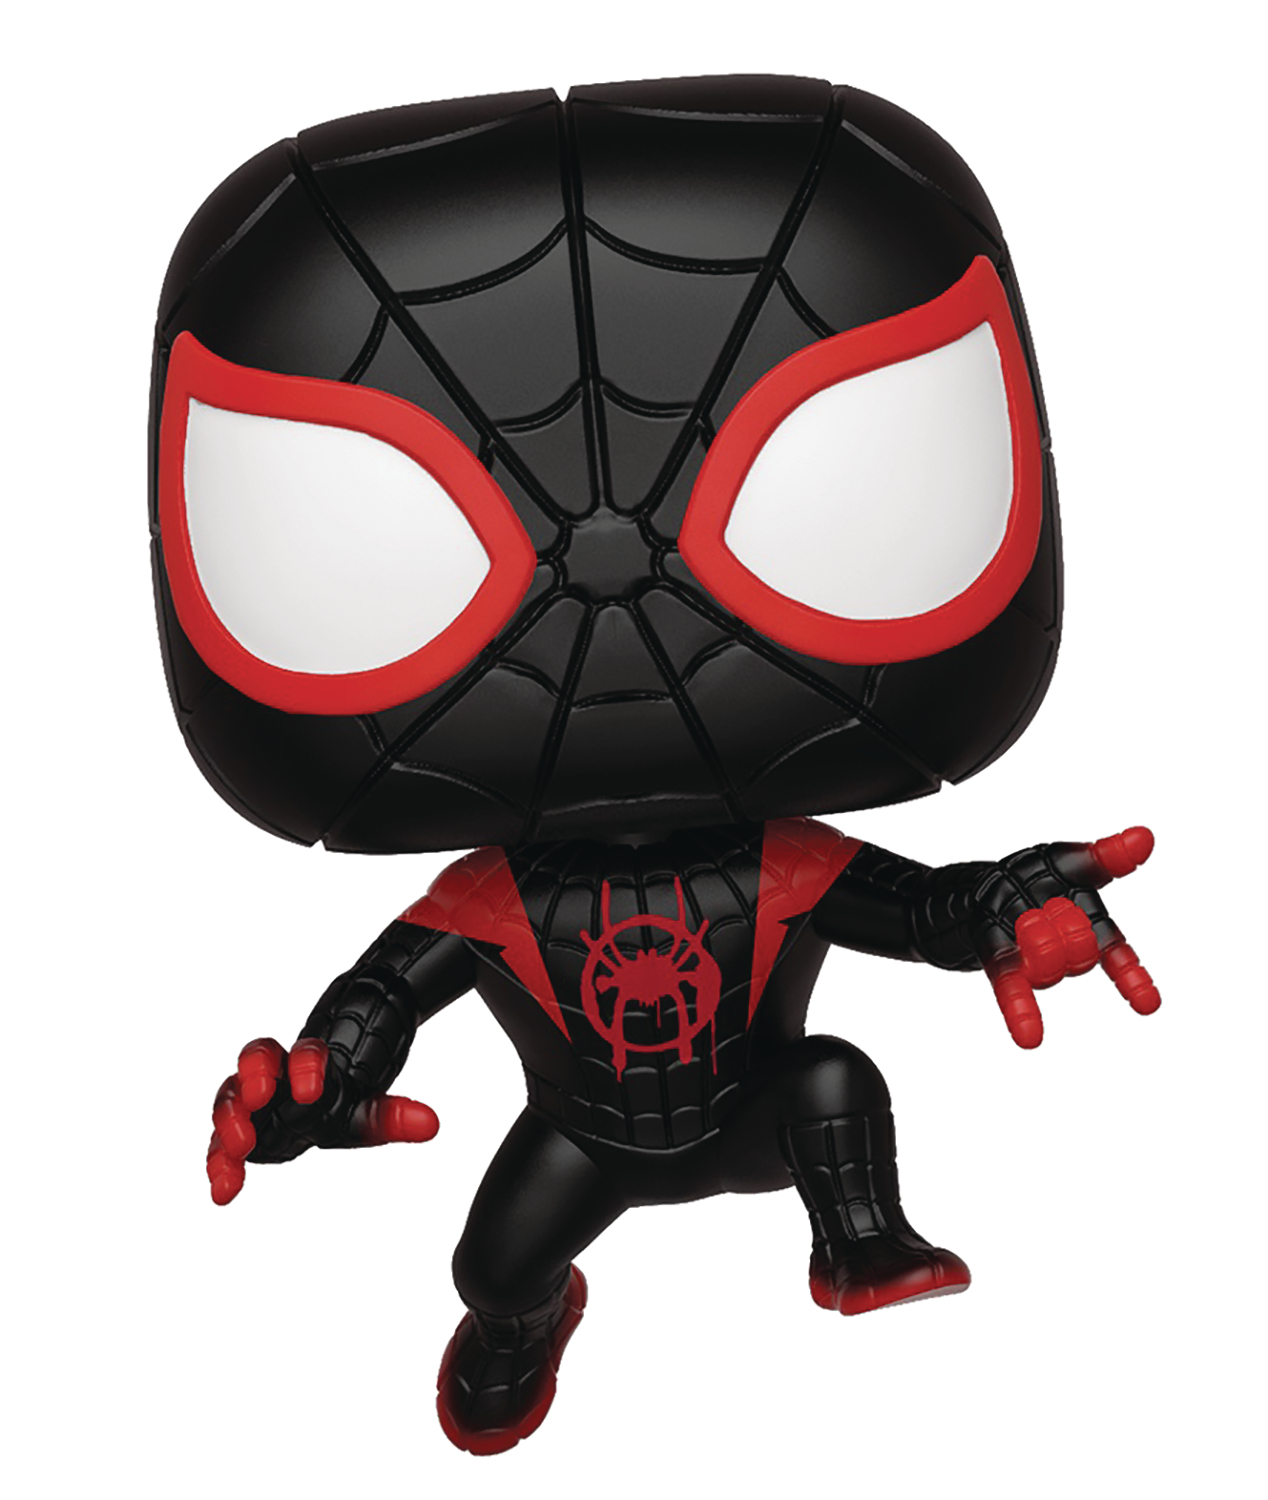 New Marvel's Spider-Man: Miles Morales Funko Pop! Figures